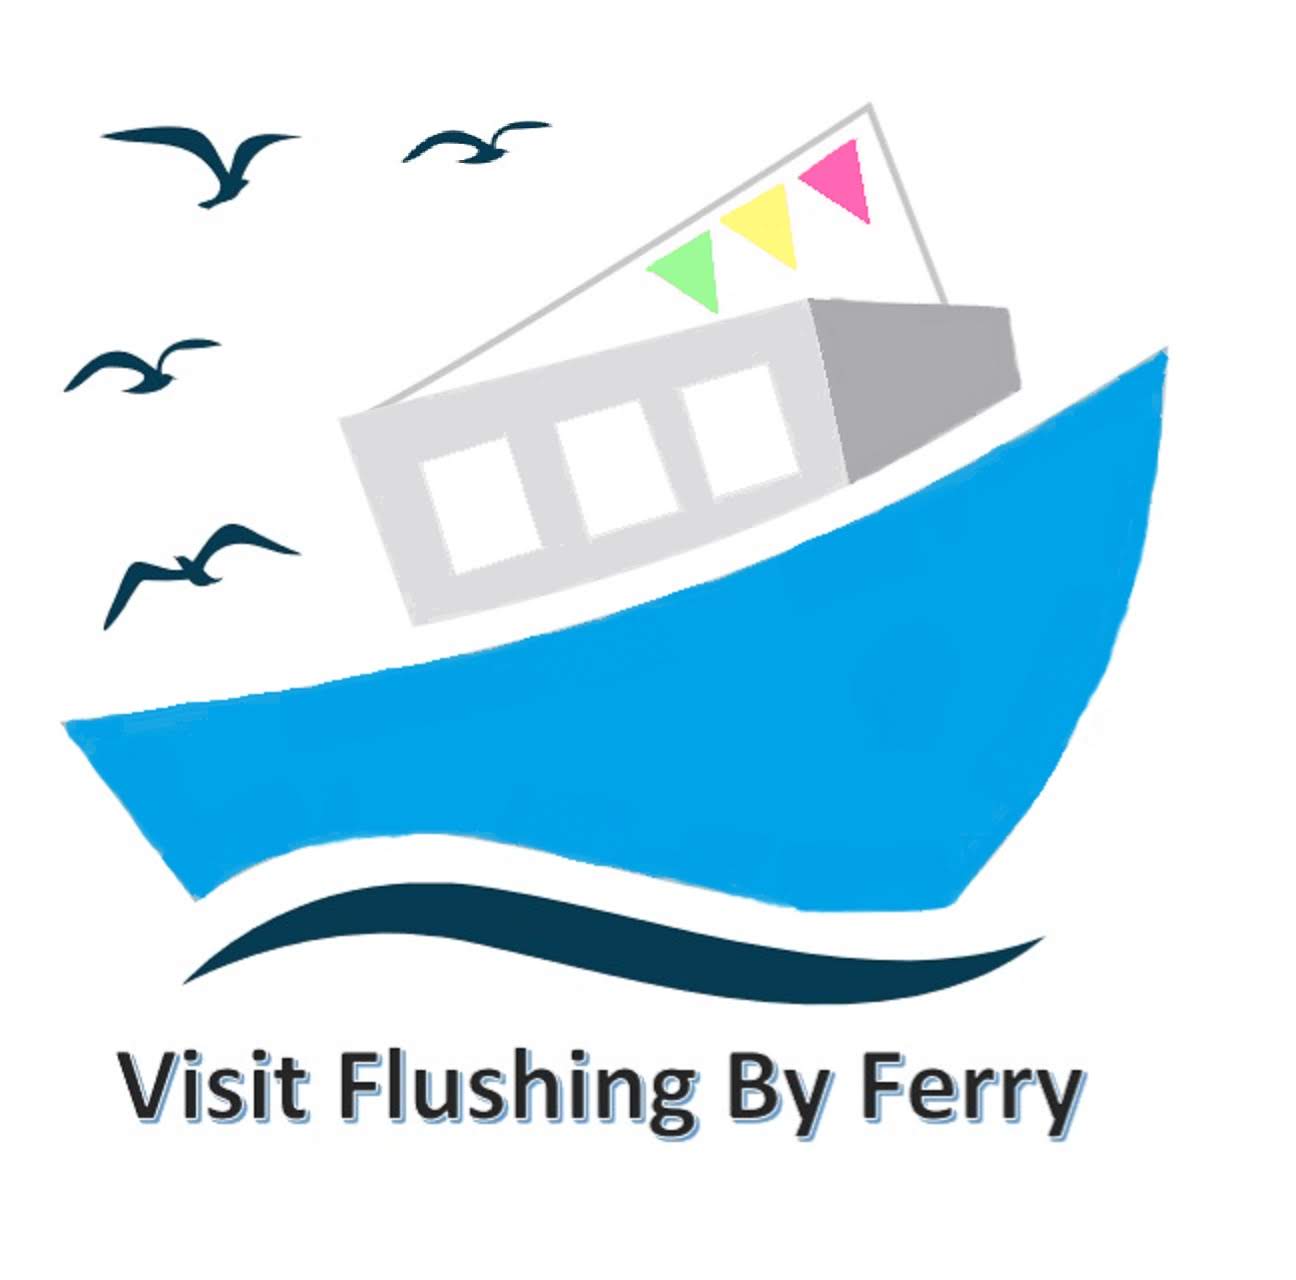 Flushing Ferry